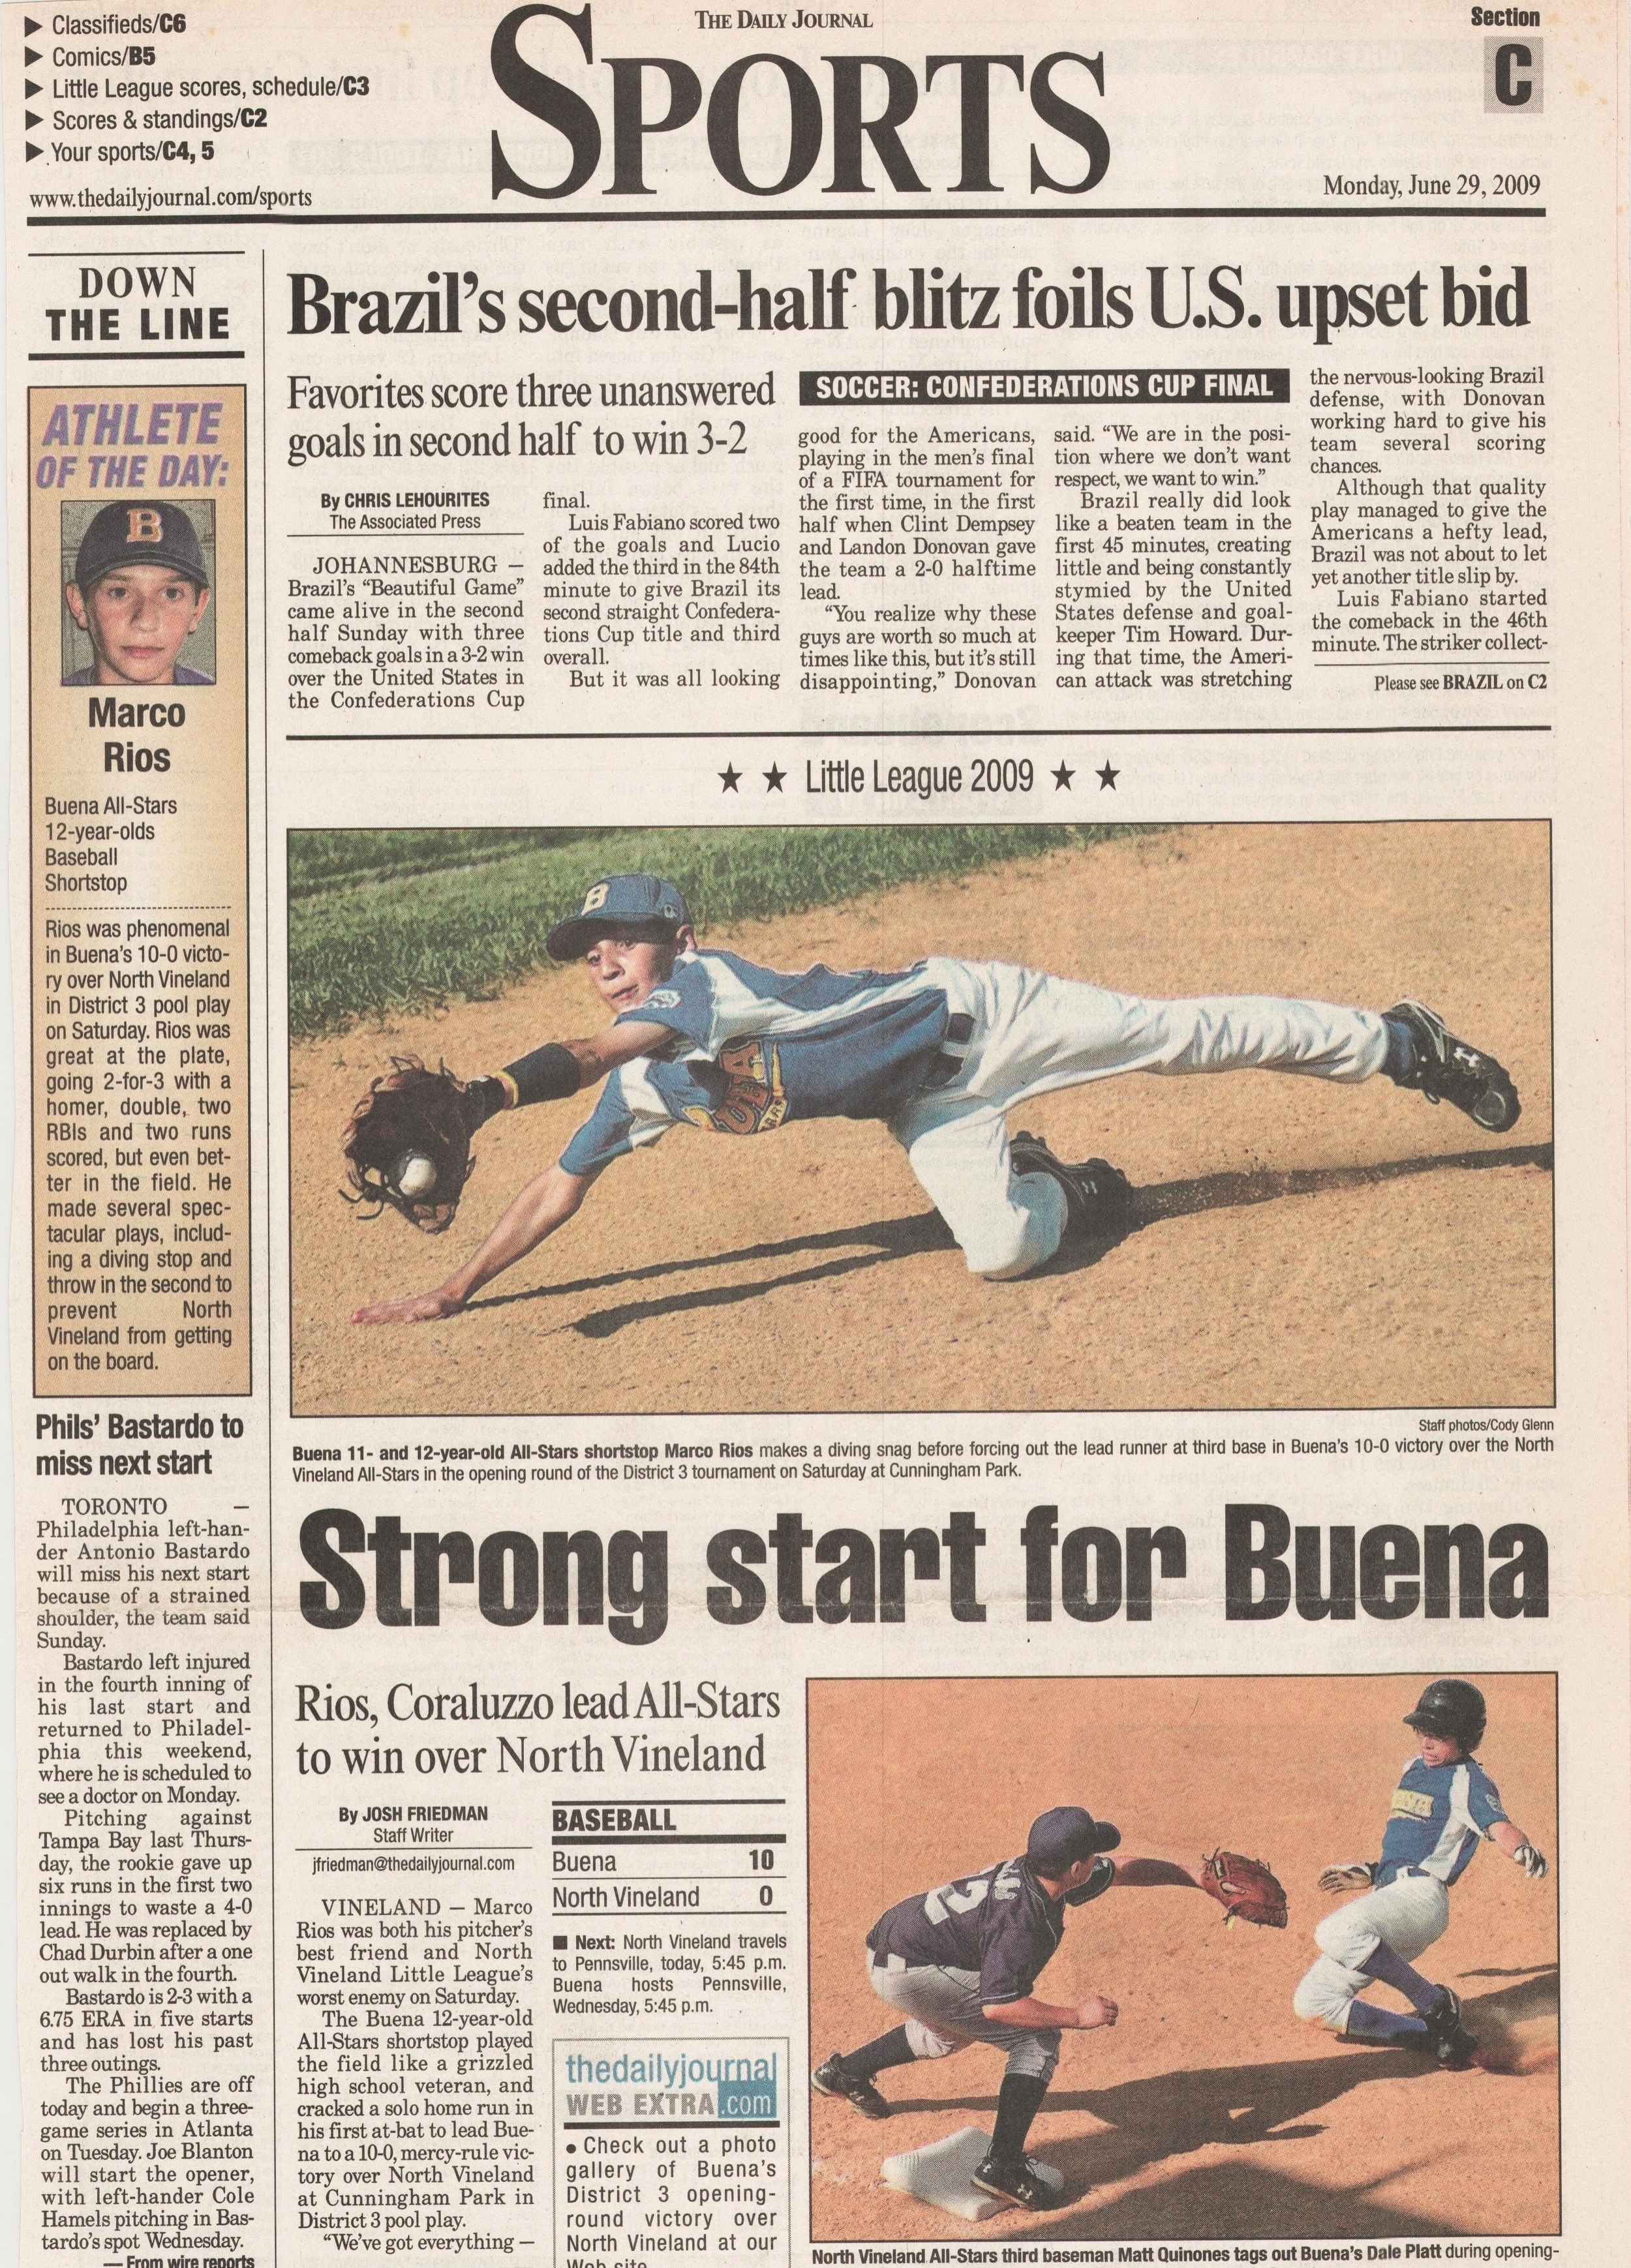  Buena v East Vineland Little League June 29 2009 /  The Daily Journal  